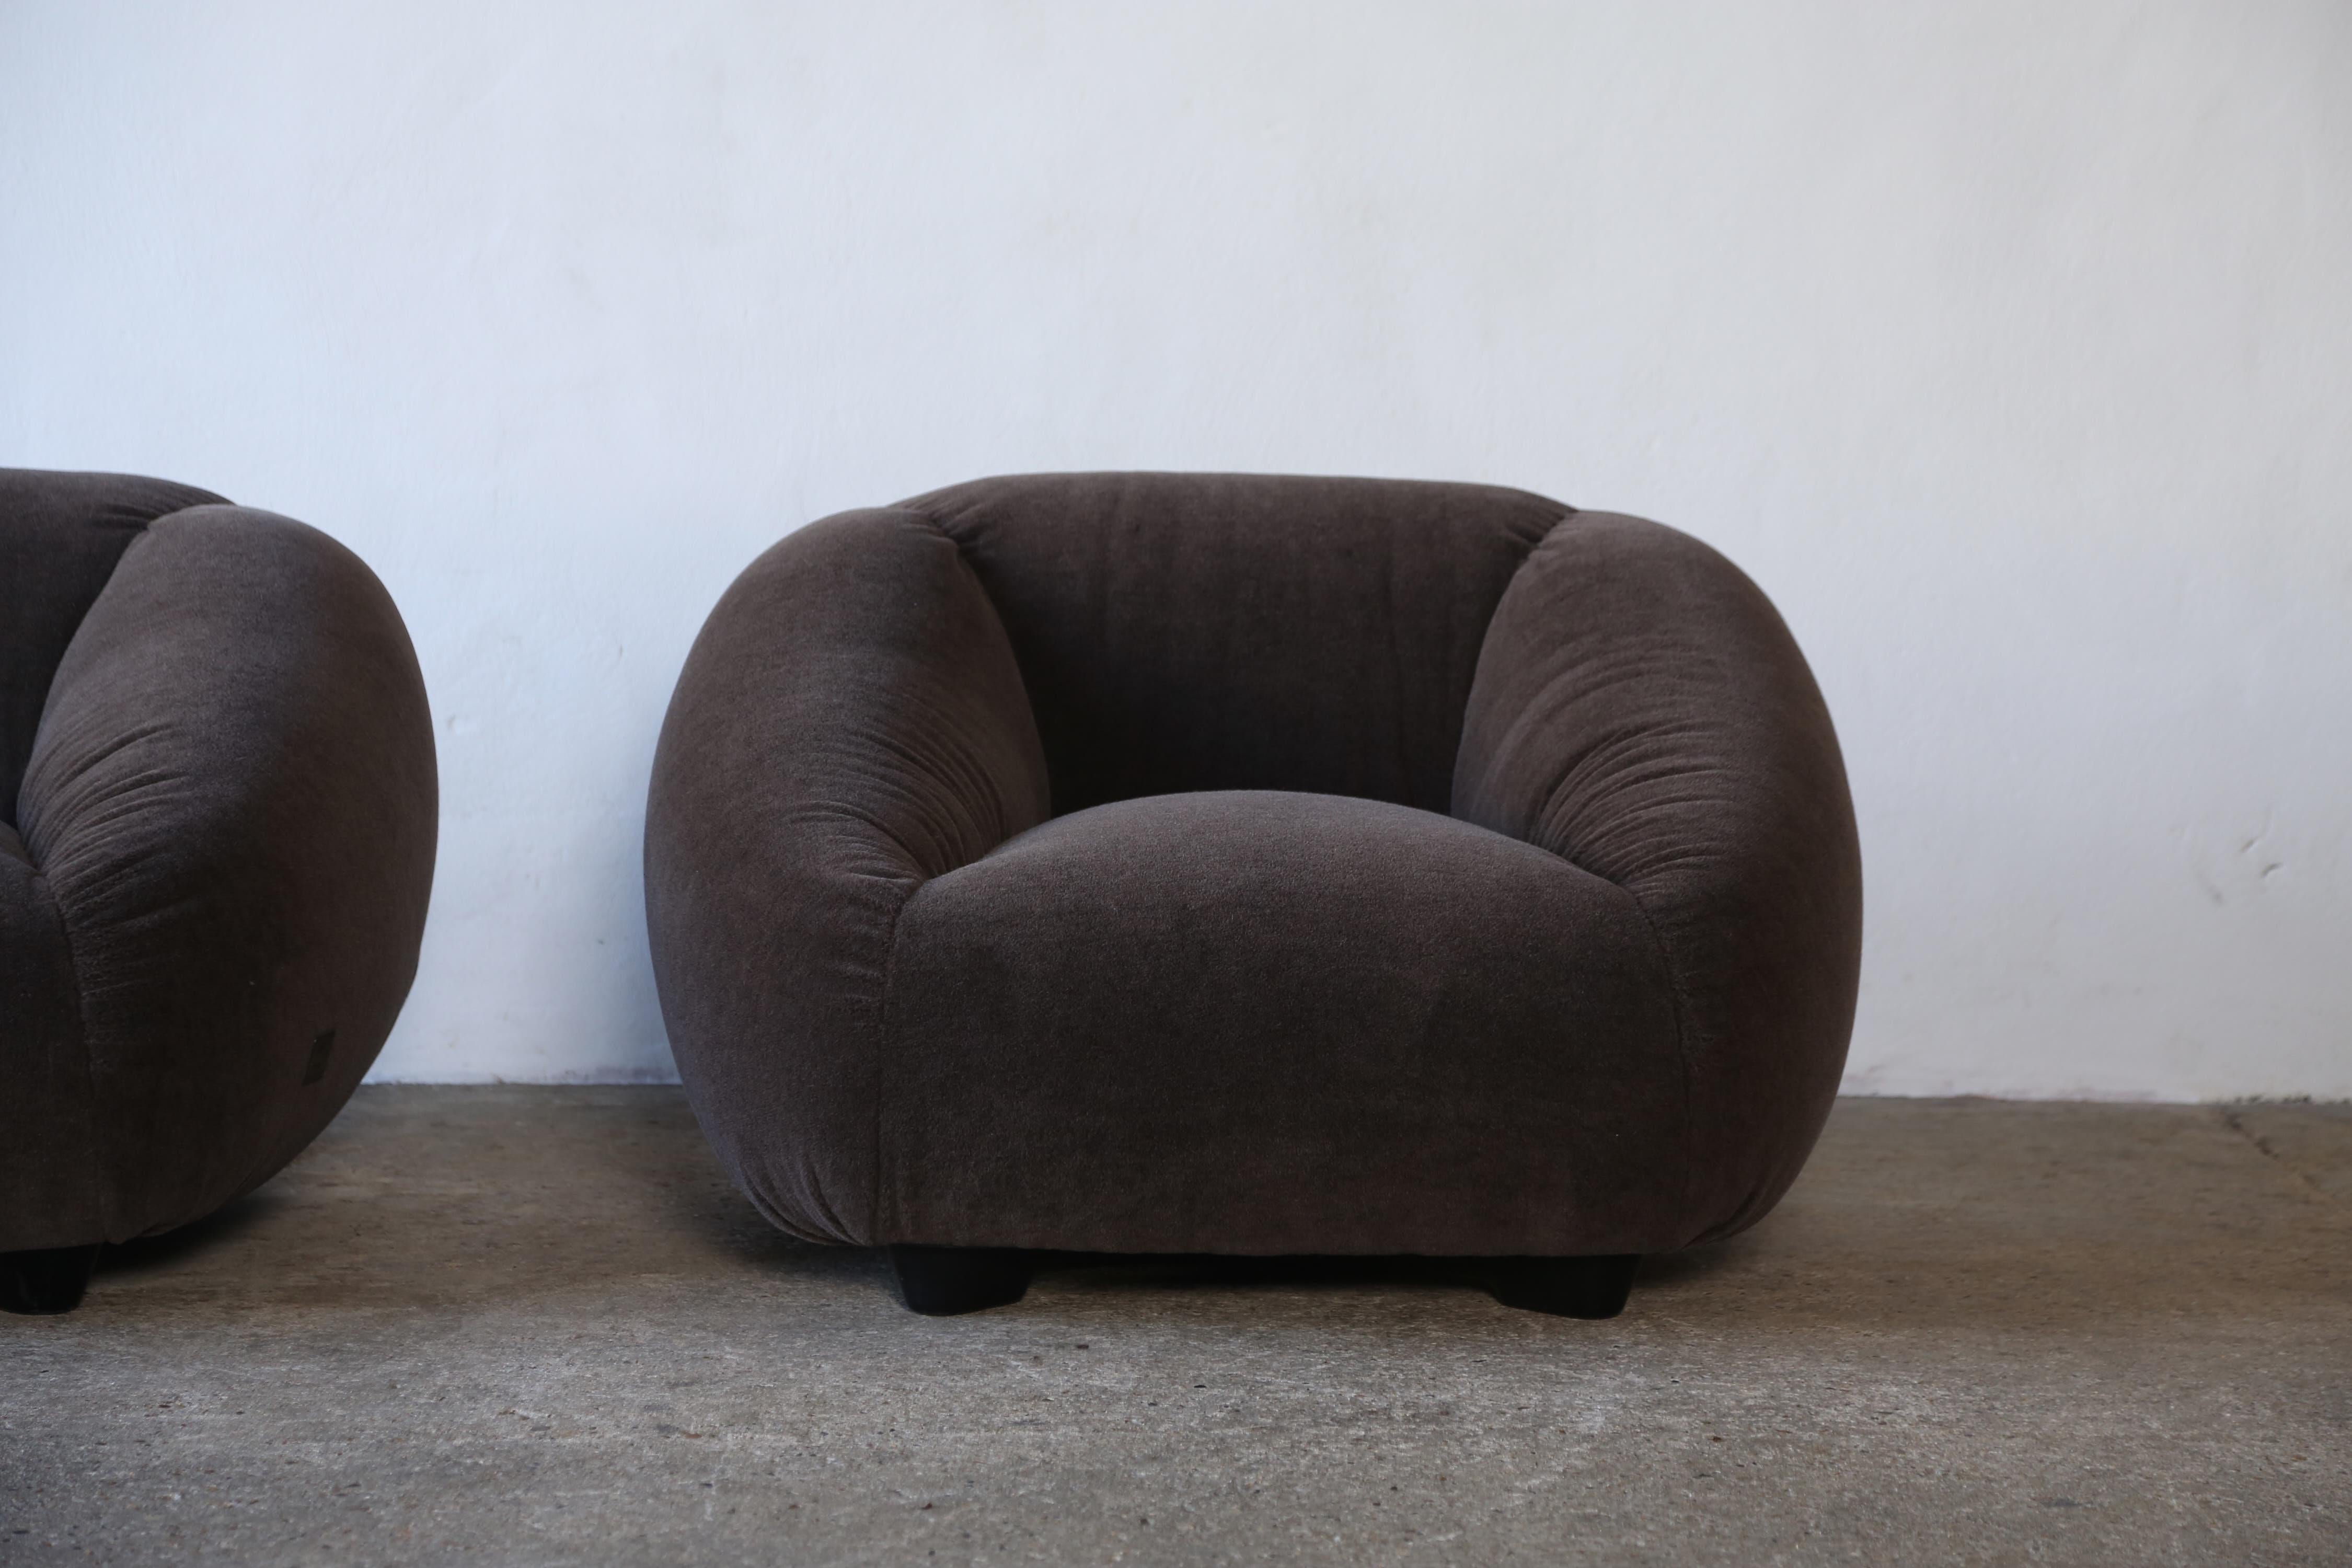 Rare Pair of Gruppo / Studio G14 T.E.E. Chairs, Italy, 1970s For Sale 4